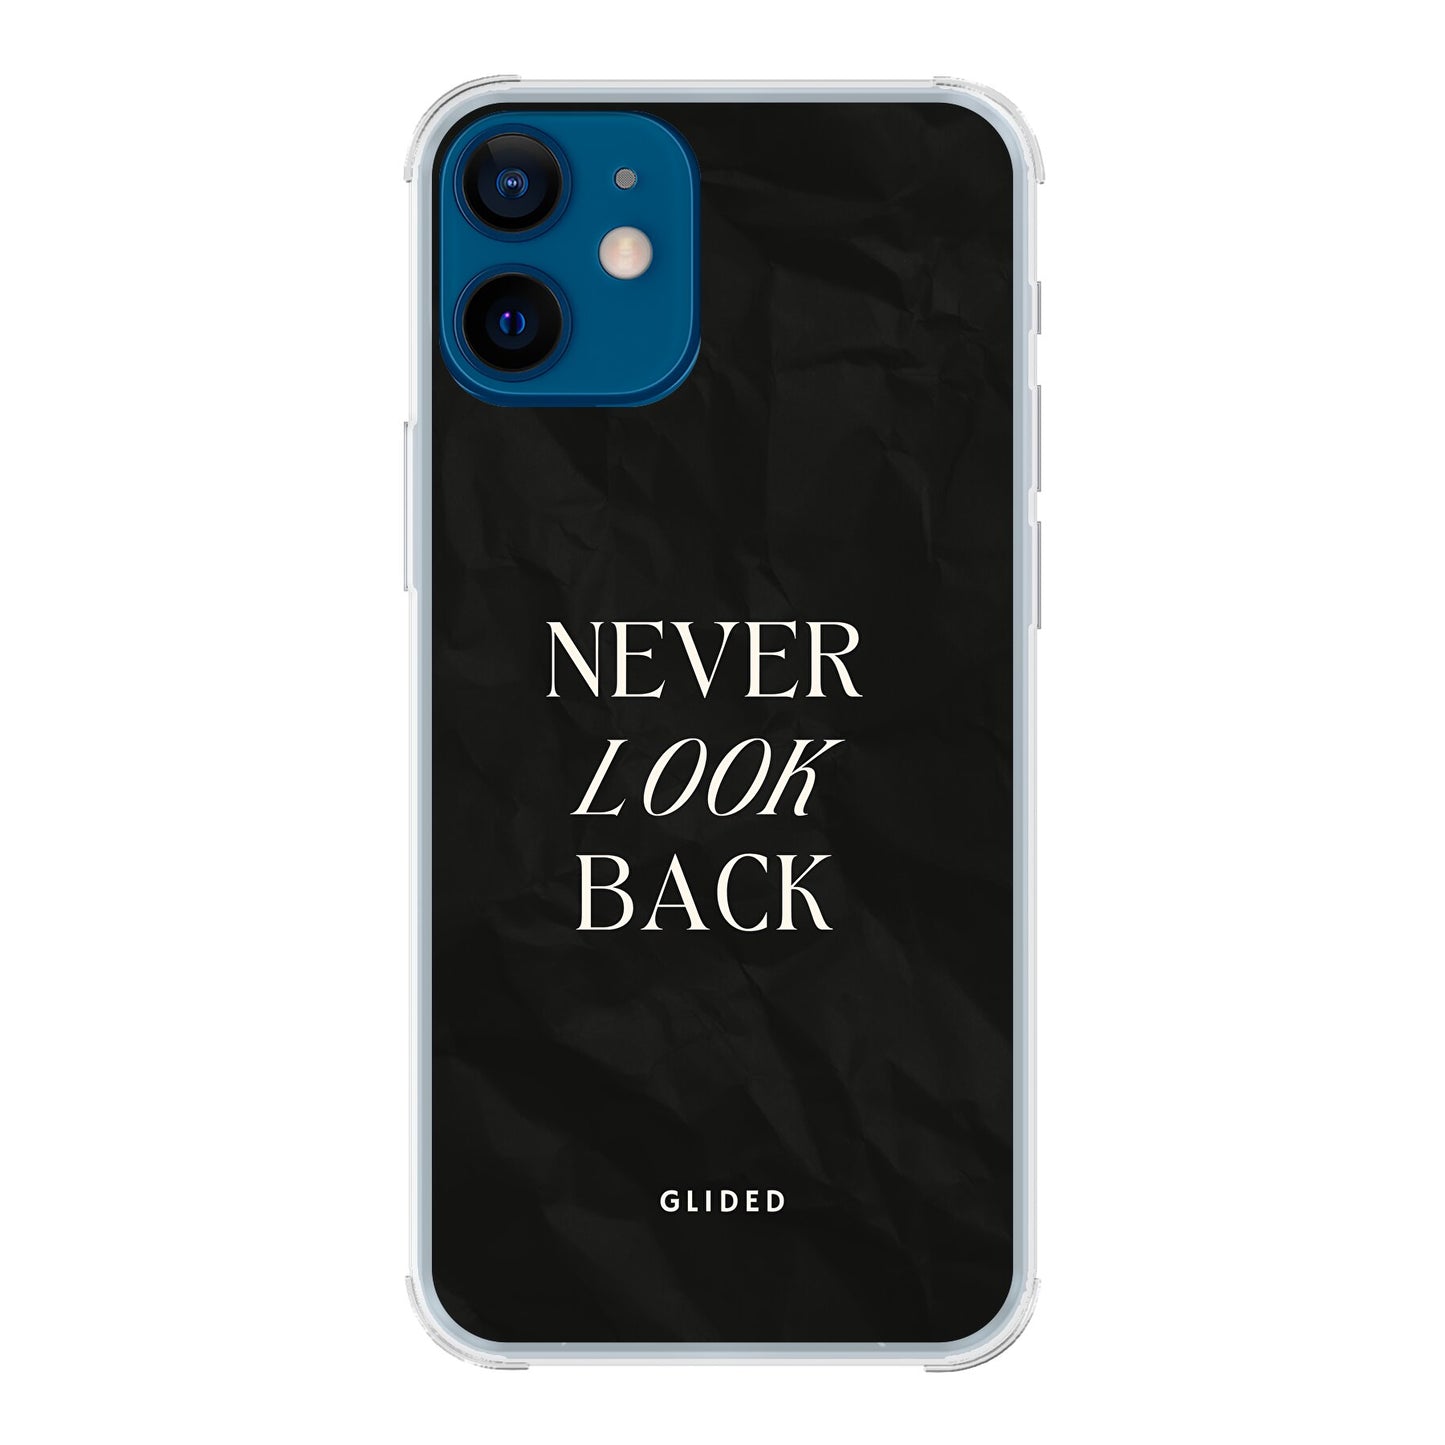 Never Back - iPhone 12 mini Handyhülle Bumper case